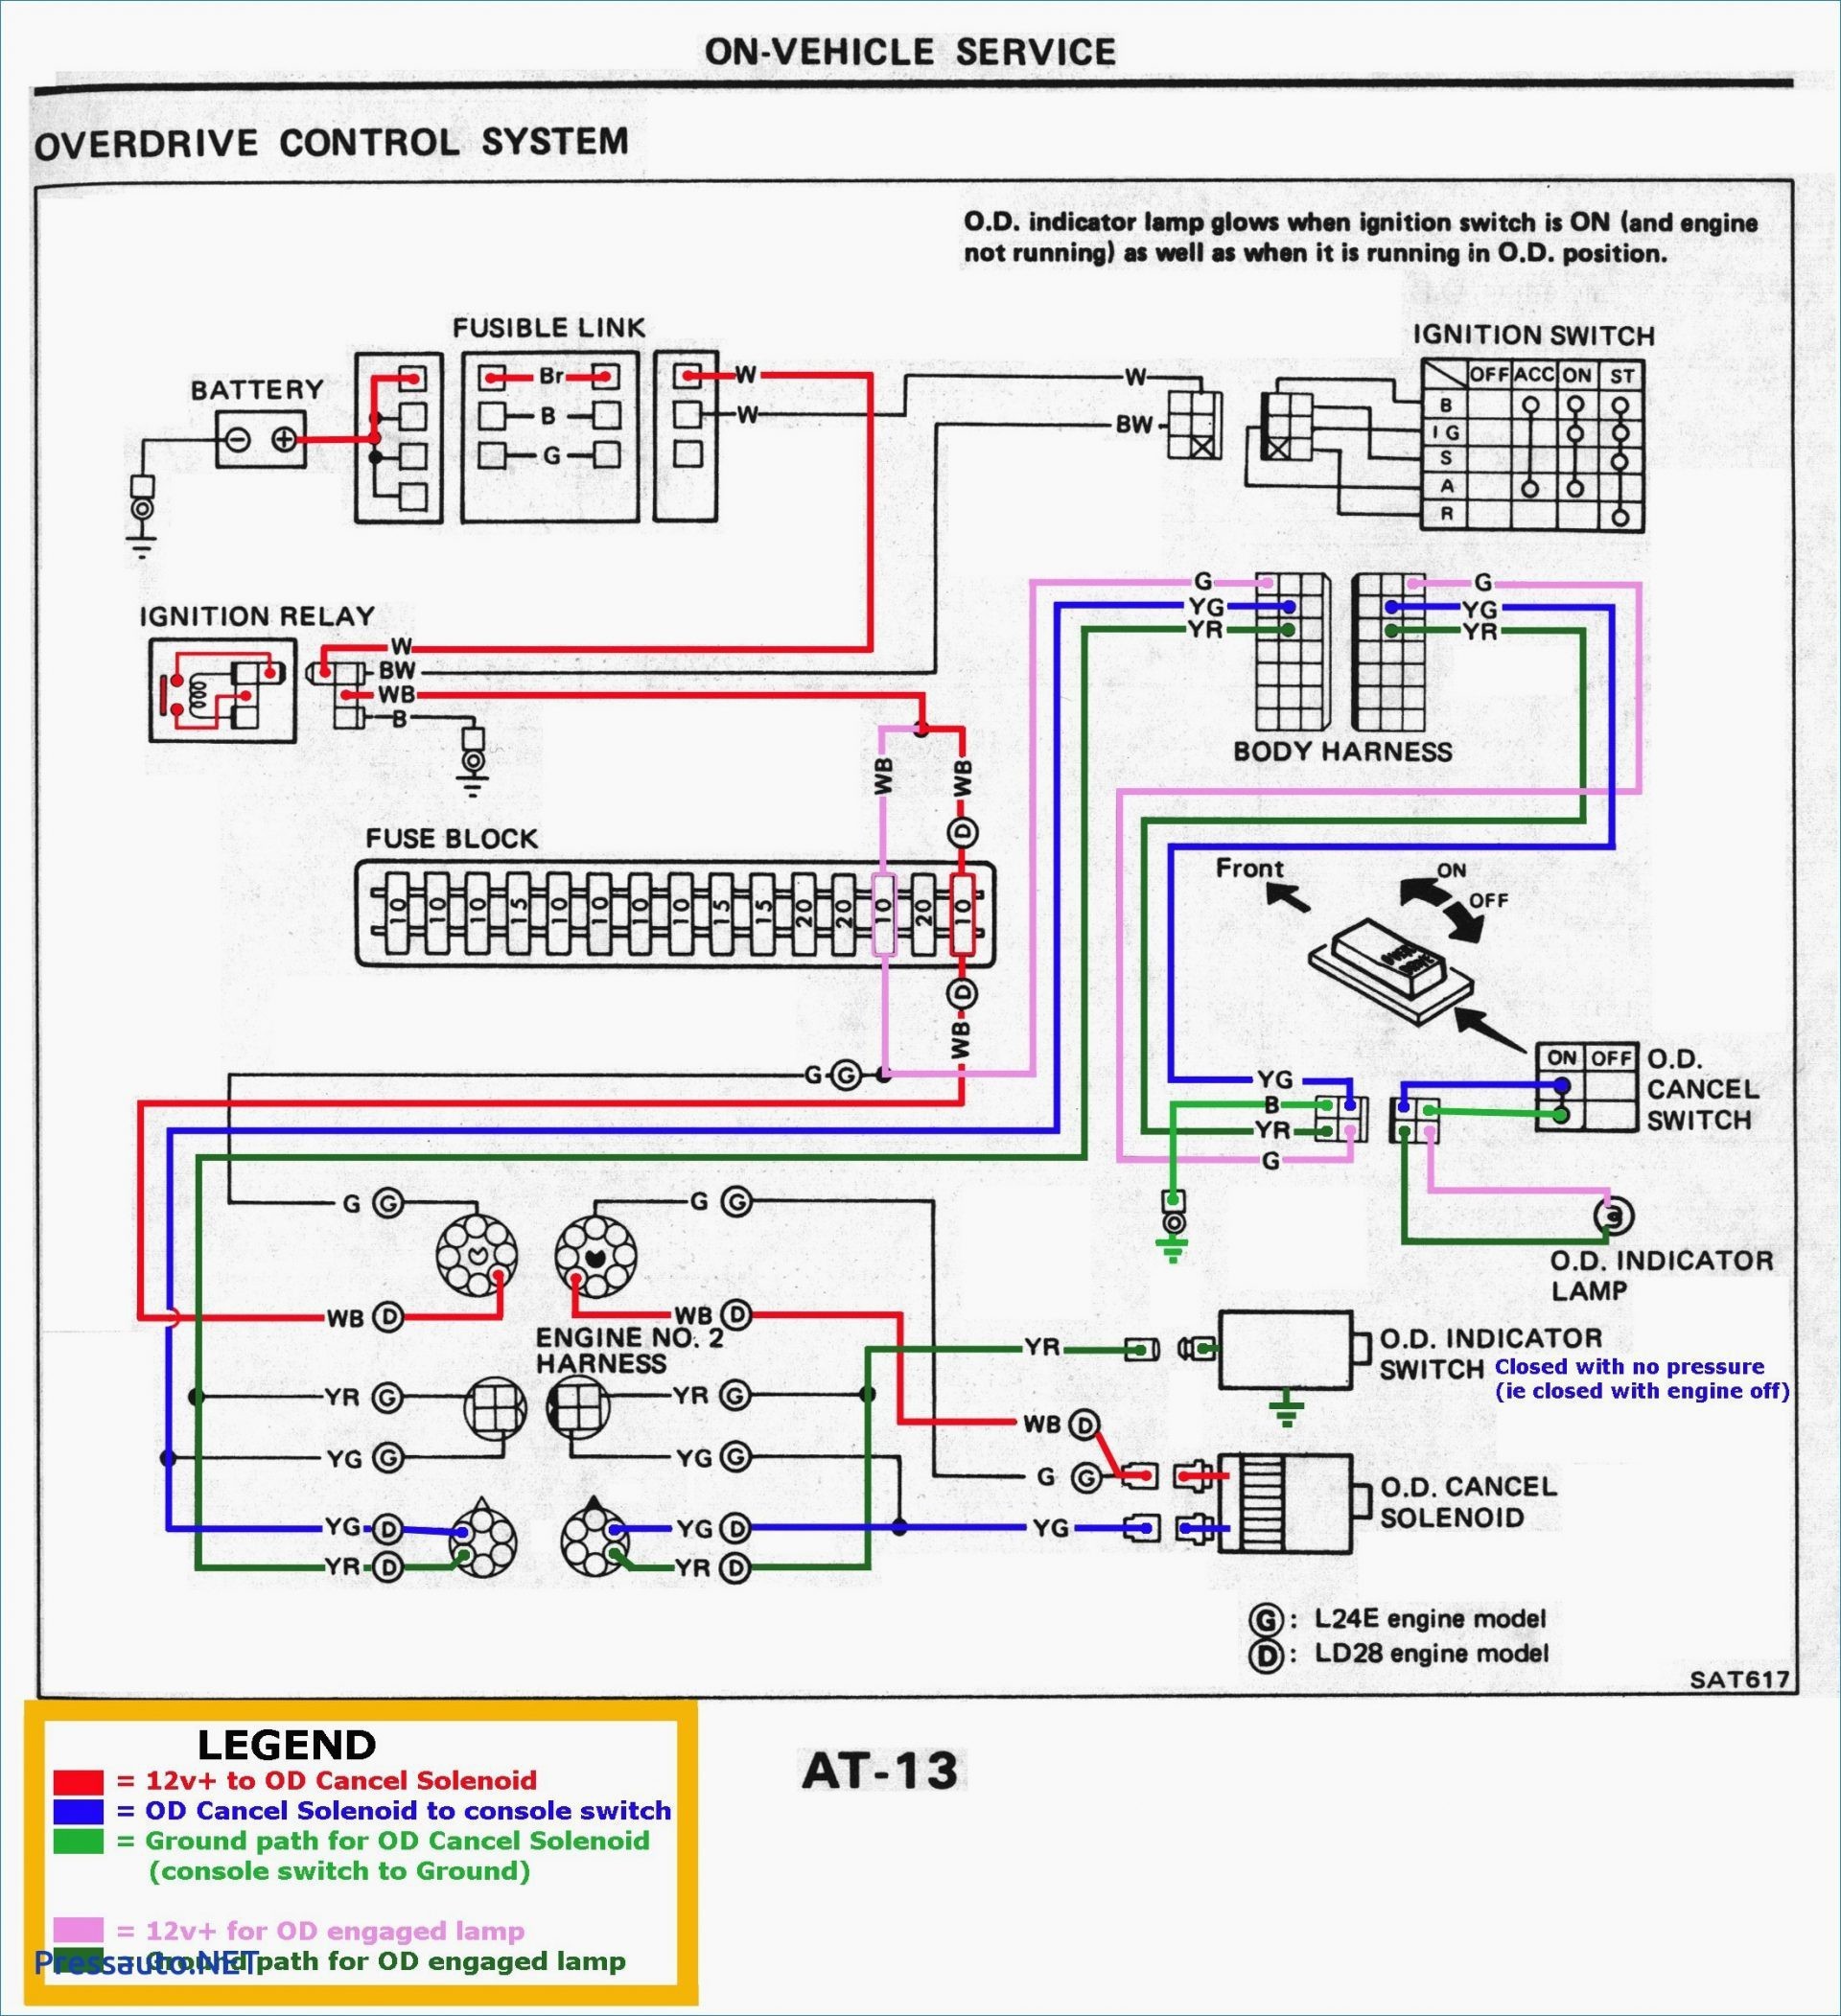 2001 Vw Jetta Engine Diagram 2007 toyota Fj Cruiser Engine Diagram Worksheet and Wiring Diagram • Of 2001 Vw Jetta Engine Diagram